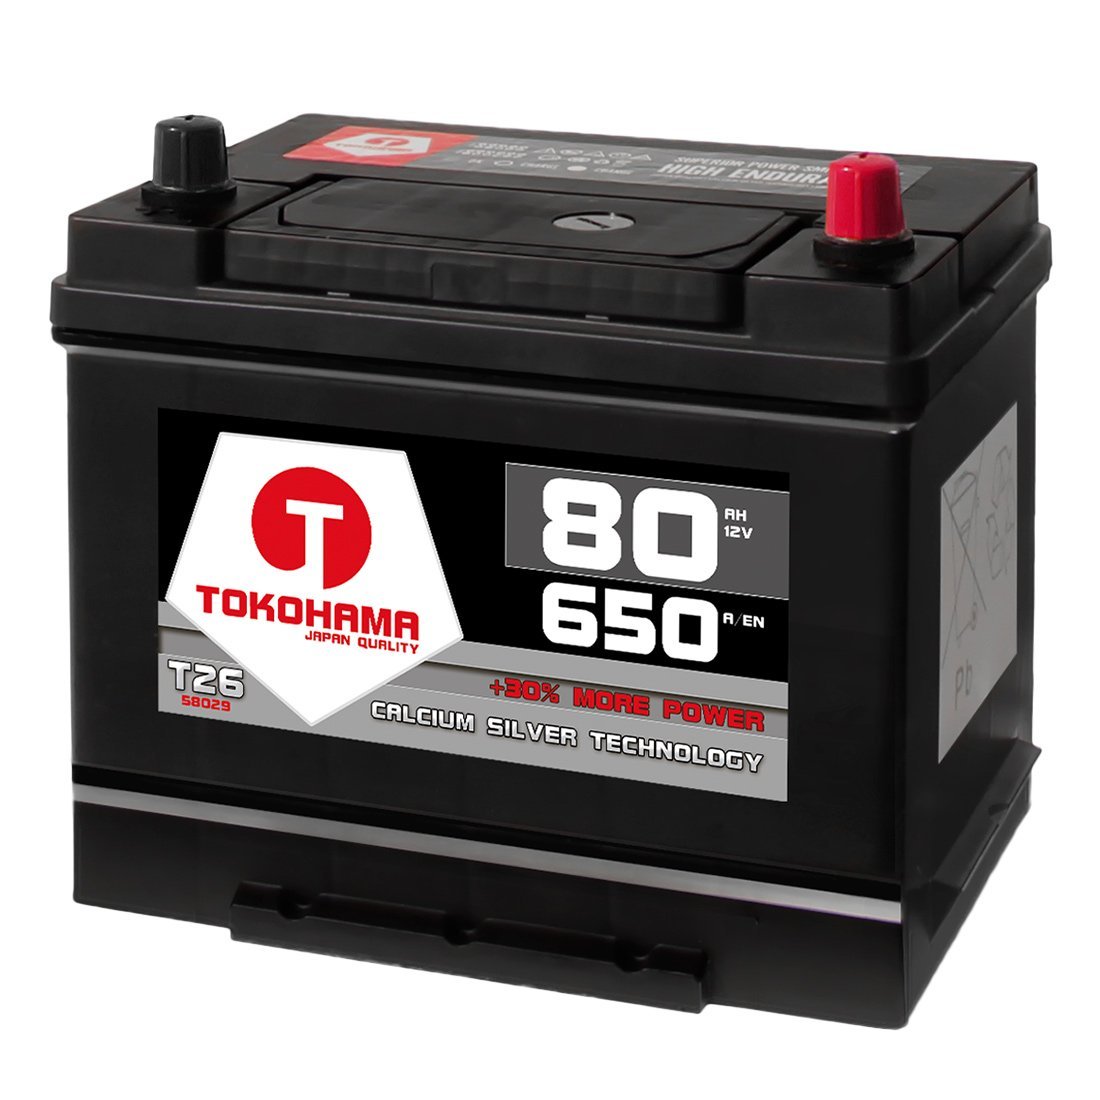 Tokohama Autobatterie 80Ah 650A/EN Asia Japan Starter Batterie Plus Pol Rechts ersetzt 70Ah 75Ah 12V von T TOKOHAMA JAPAN QUALITY